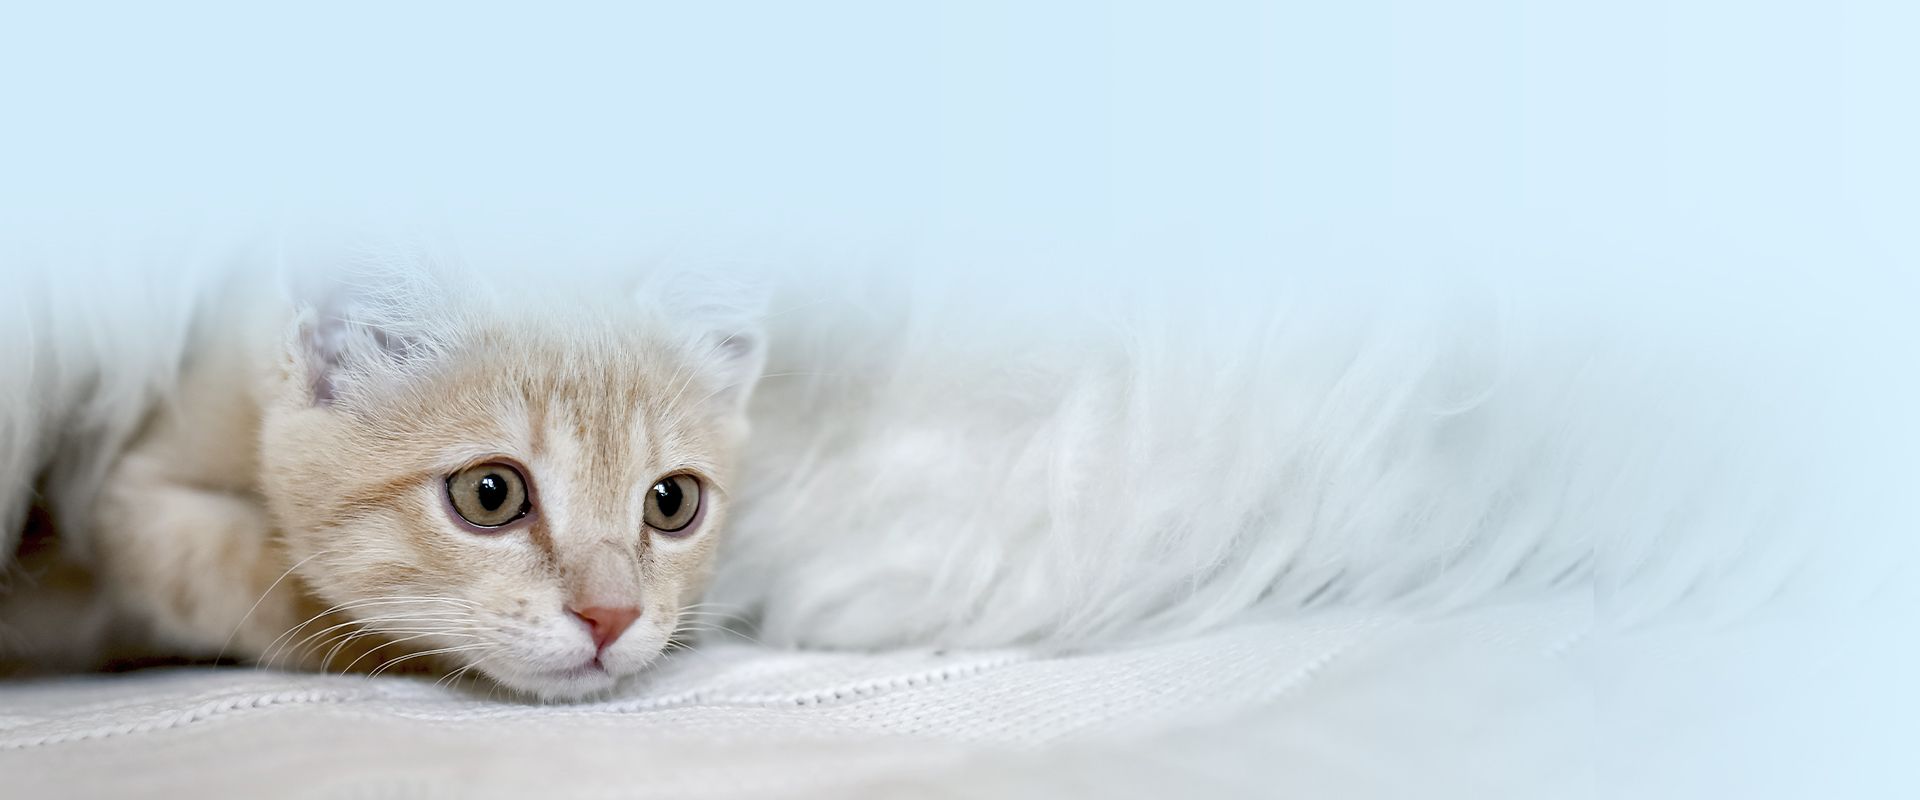 orange cat hiding inside some blankets on a bed